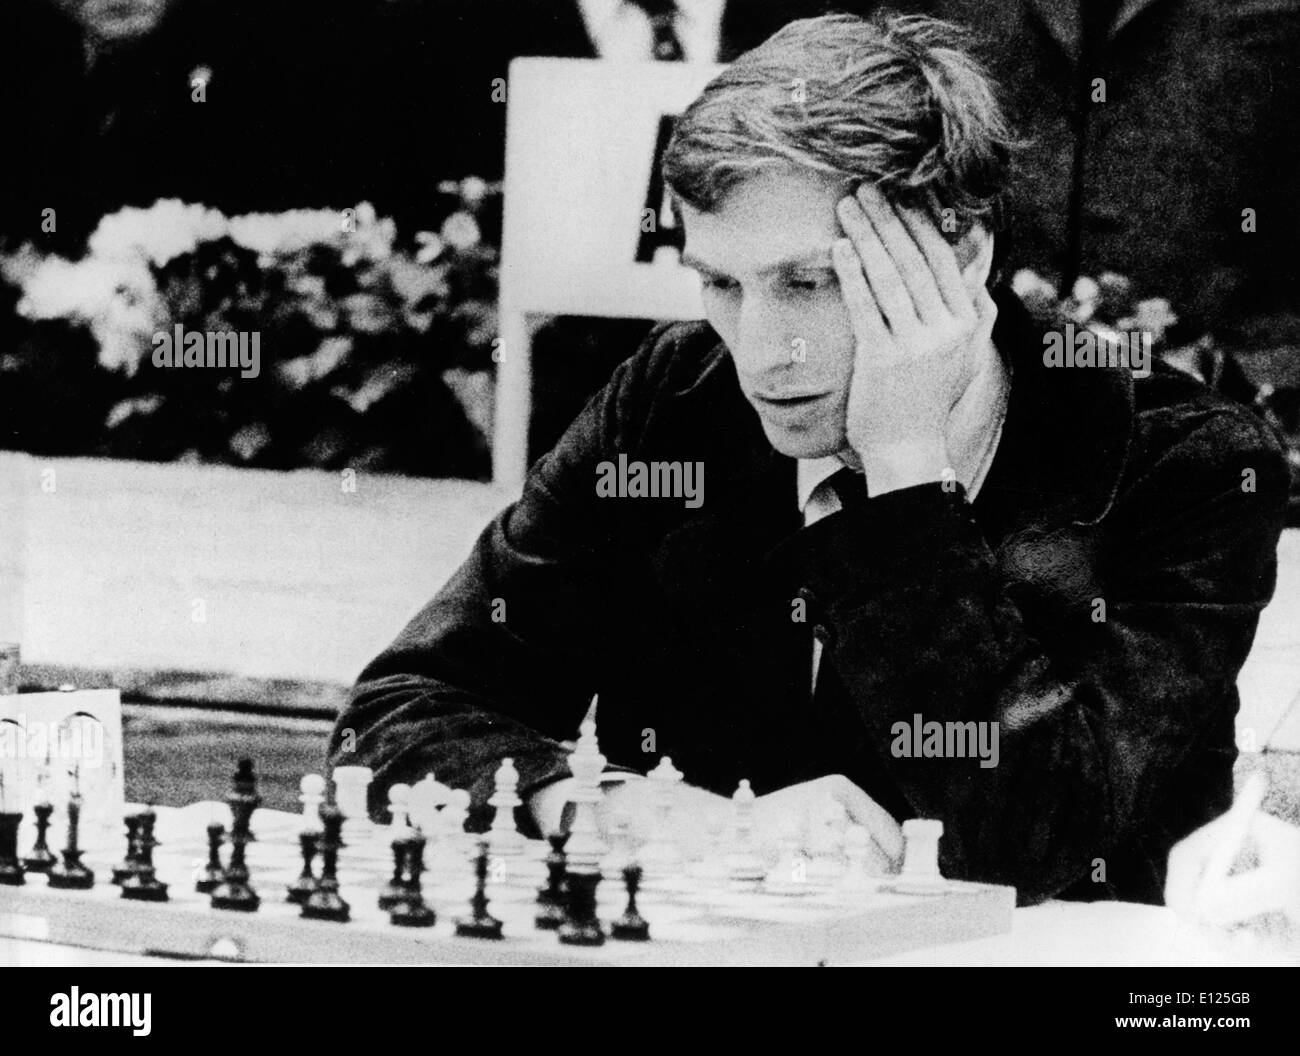 Russia 🇷🇺 on X: ♟️ Today the 🔟th World Chess Champion, Soviet-Russian  Grandmaster Boris #Spassky turns 8⃣4⃣ (born in 1937). He is the oldest  living world champion. @FIDE_chess 🥳 Happy birthday Boris